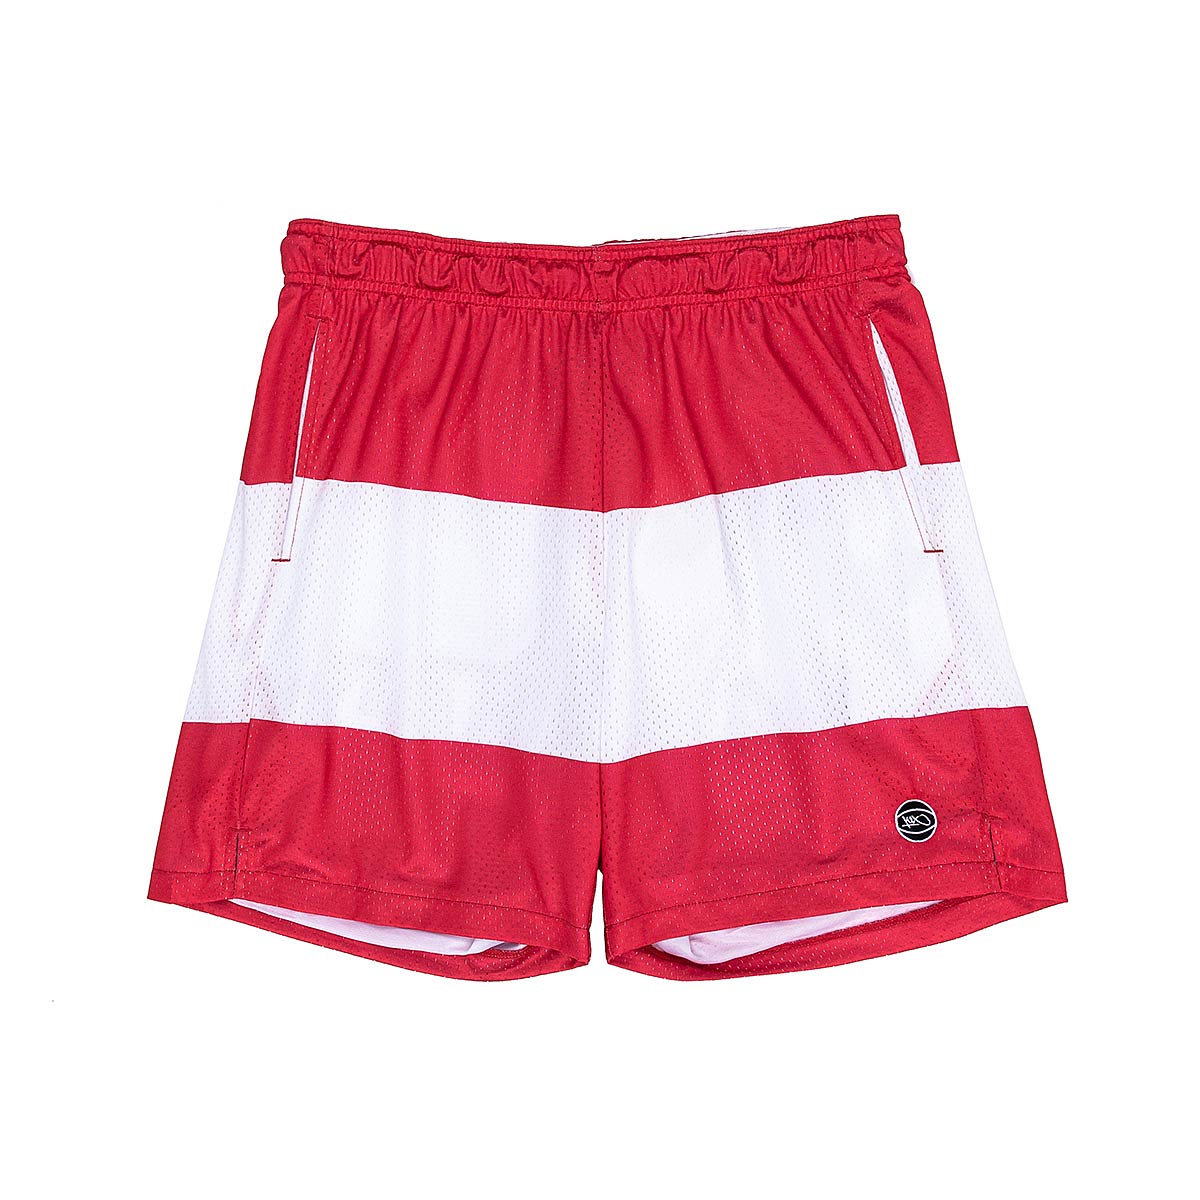 K1X White Stripe Mesh Shorts, Wue Red